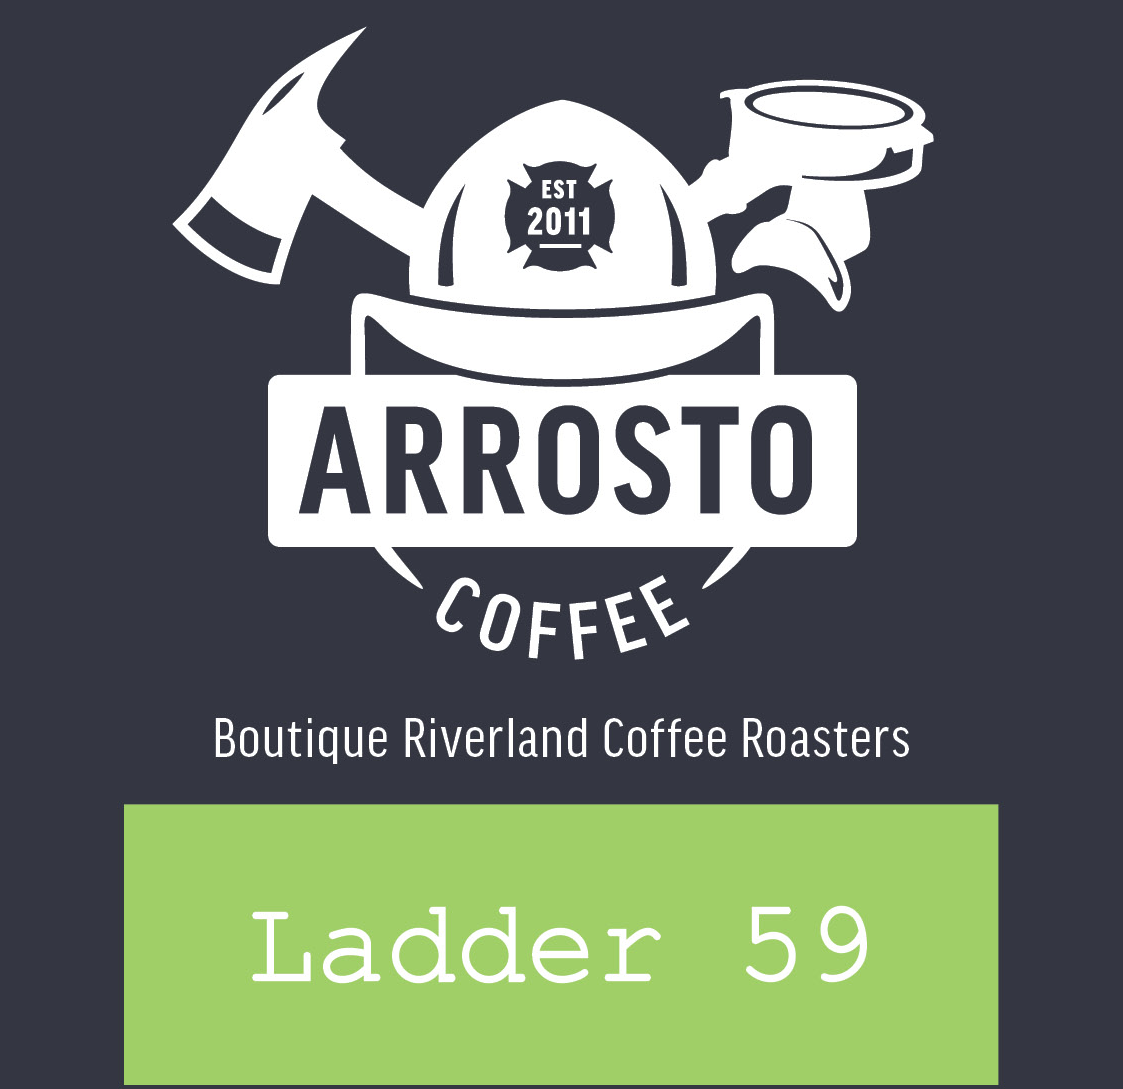 Ladder 59 - Arrosto Coffee - 250g / Beans